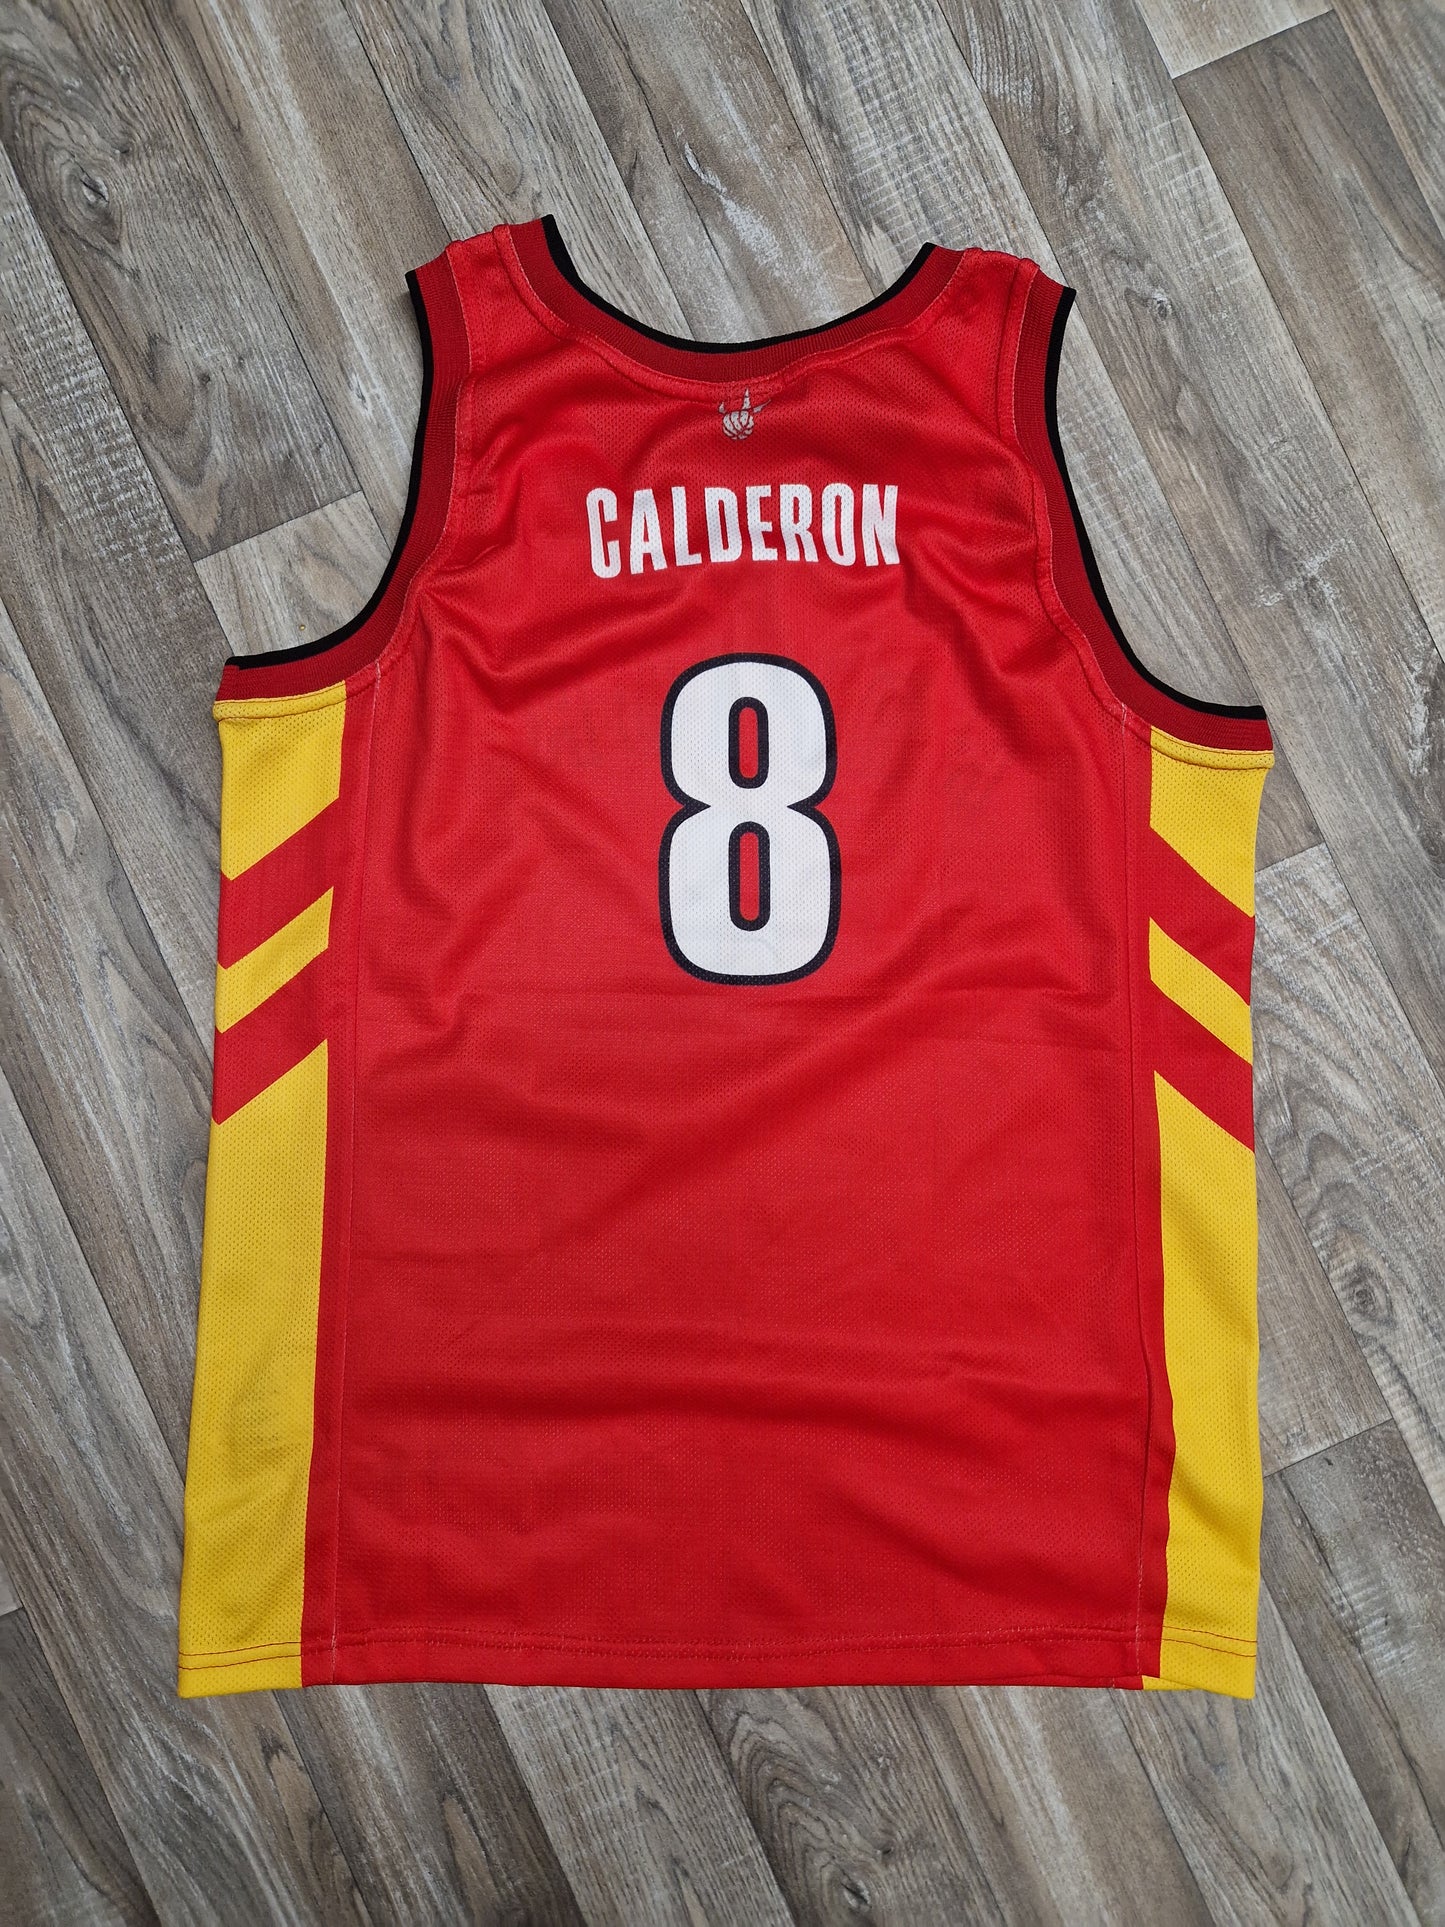 Jose Calderón Toronto Raptors Jersey Size Large